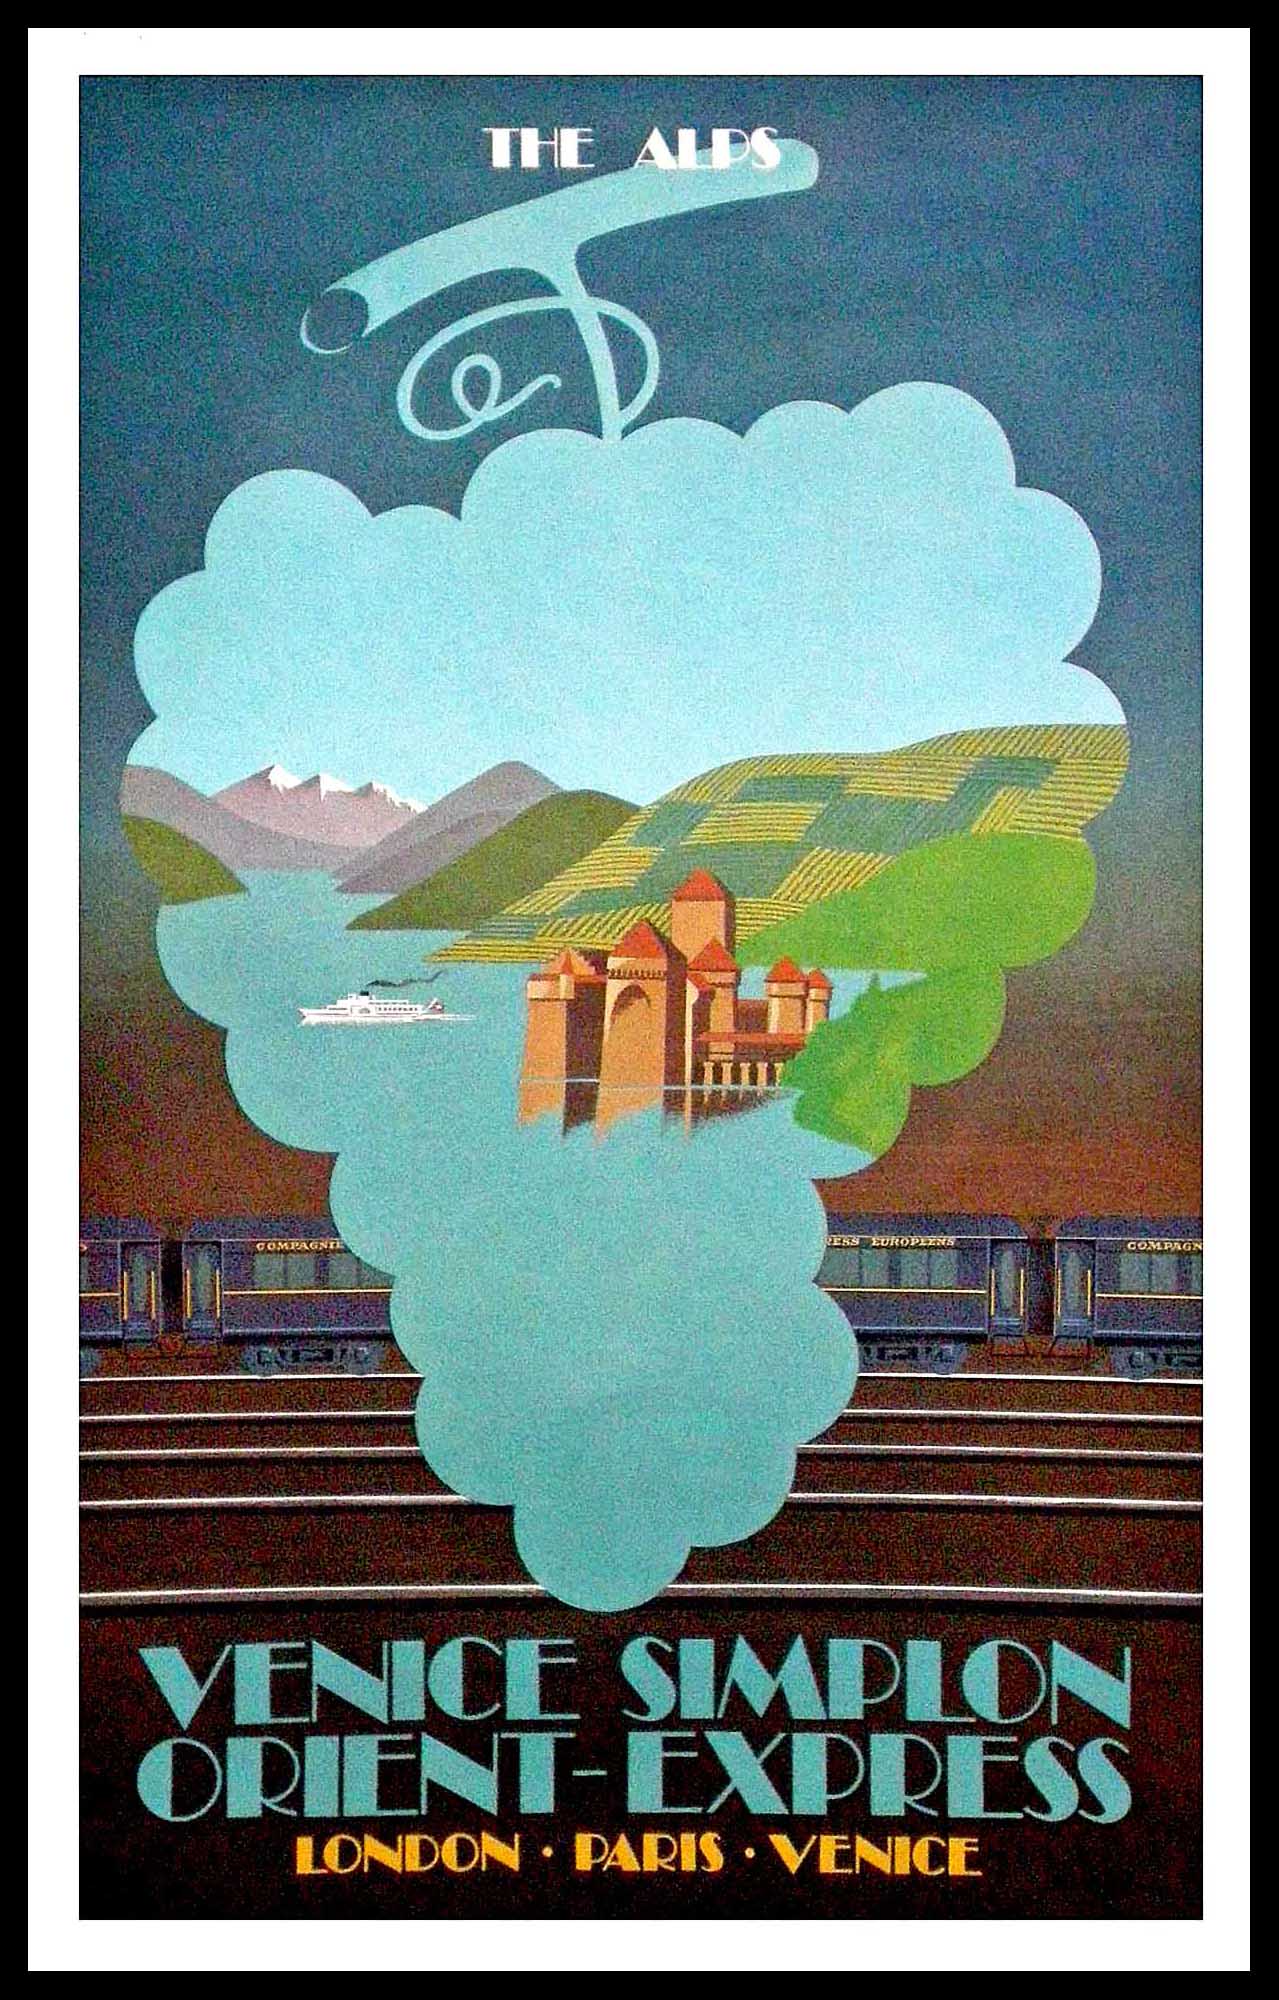 Original Vintage Poster 1981 Venice-Simplon Orient-Express 1